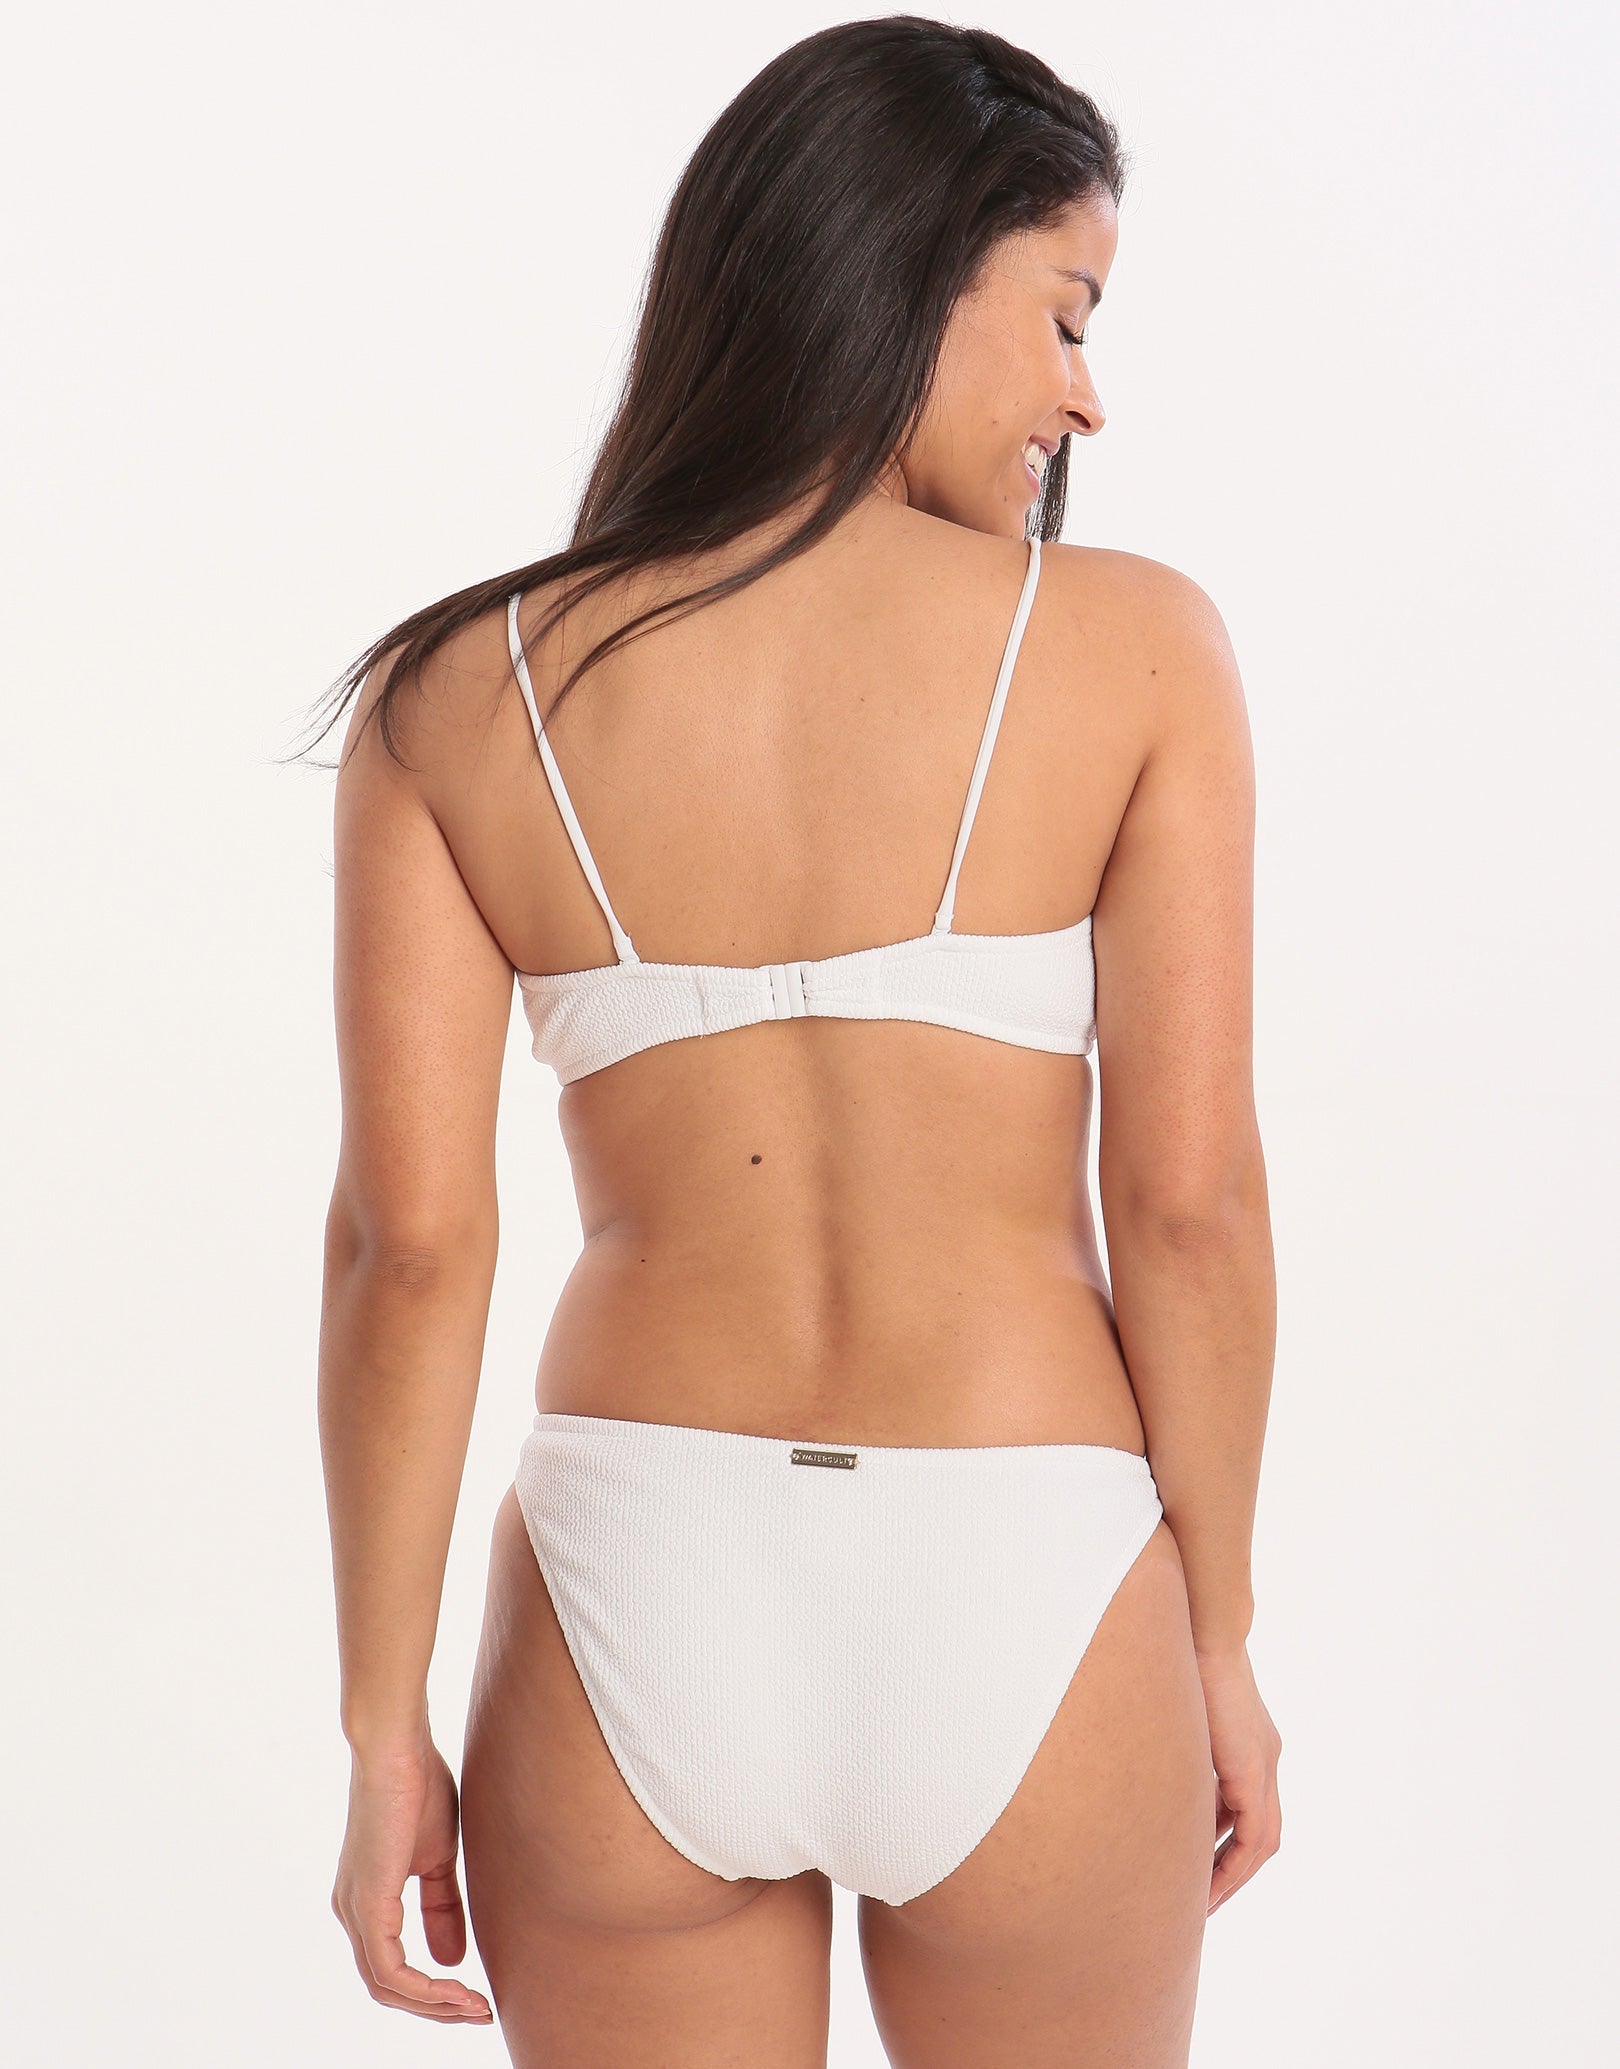 Watercult Retro Purity Zip Front Bralette Bikini Top - White